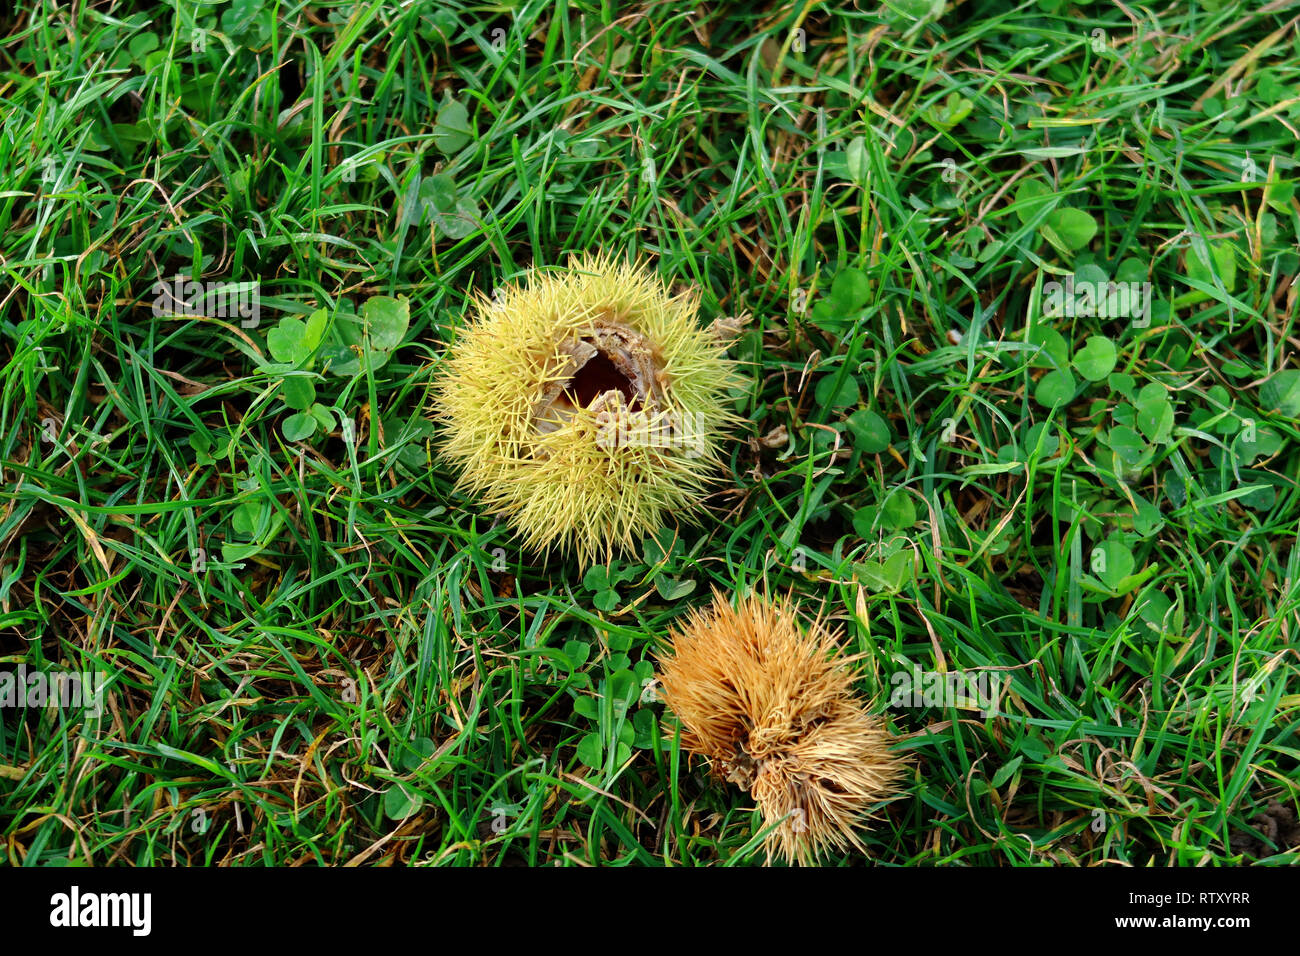 An open chestnut husk in the green grass Stock Photo